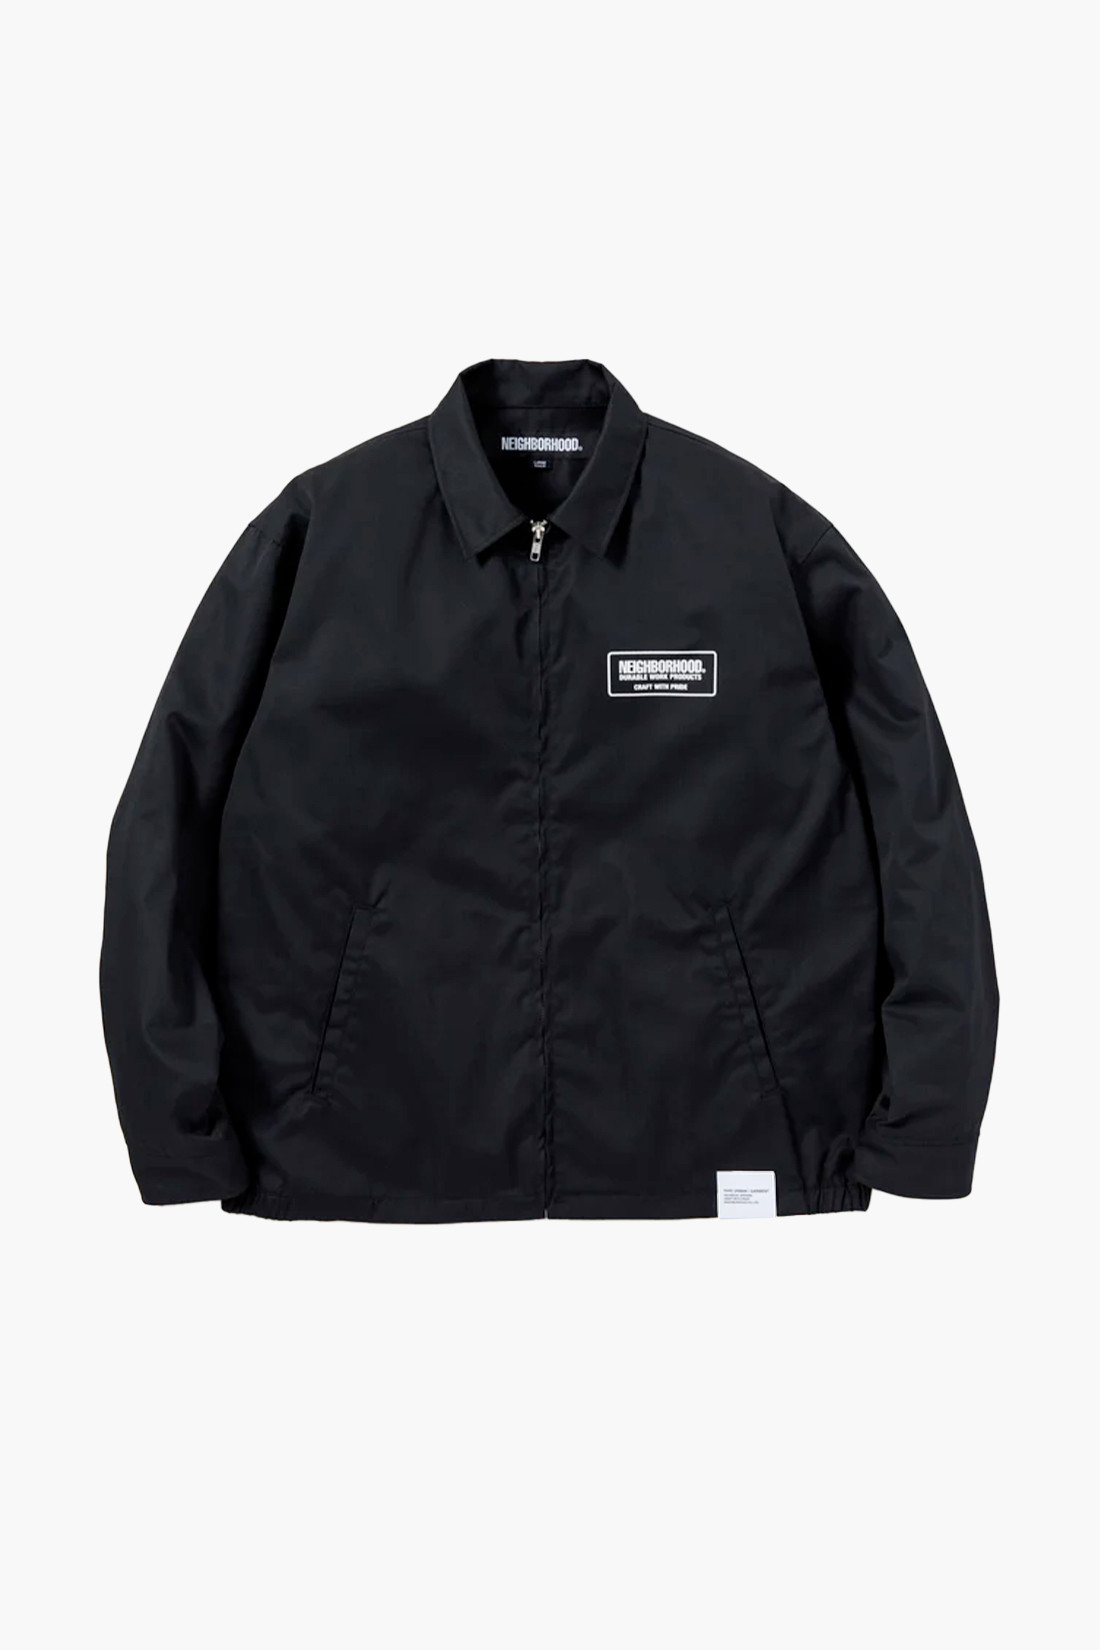 Neighborhood Zip work jacket Black - GRADUATE STORE | EN